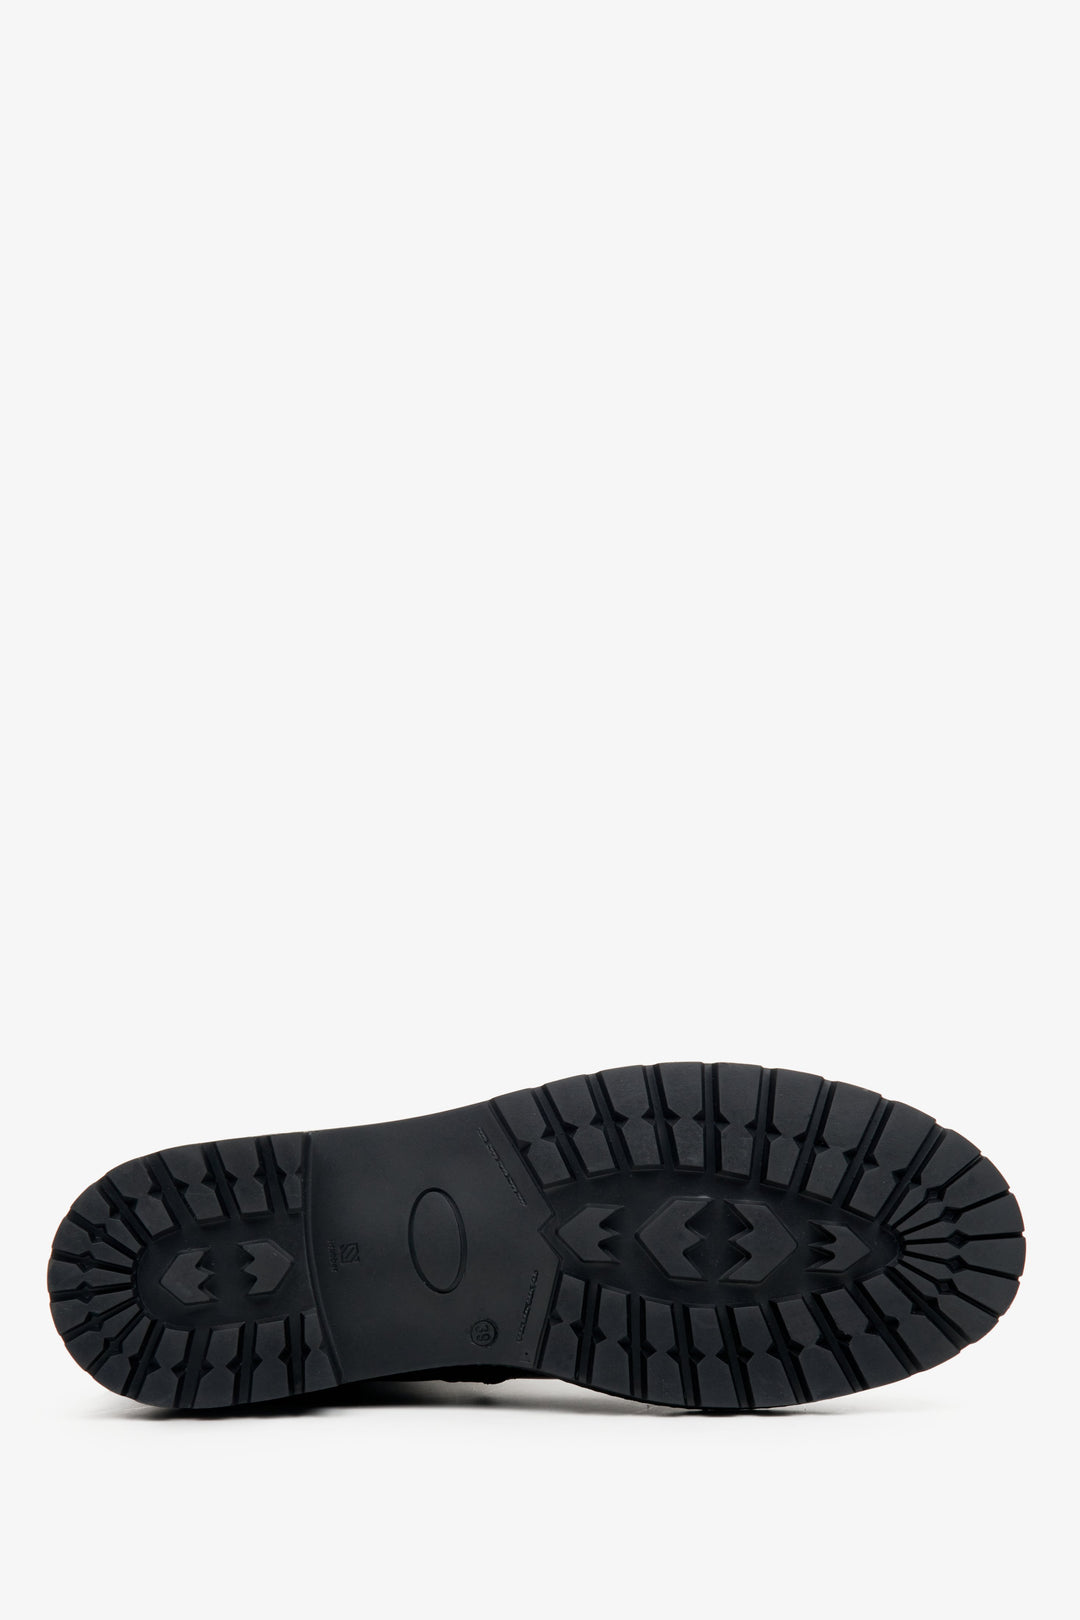 Women's black leather ankle boots Estro - a close-up on shoe sole.